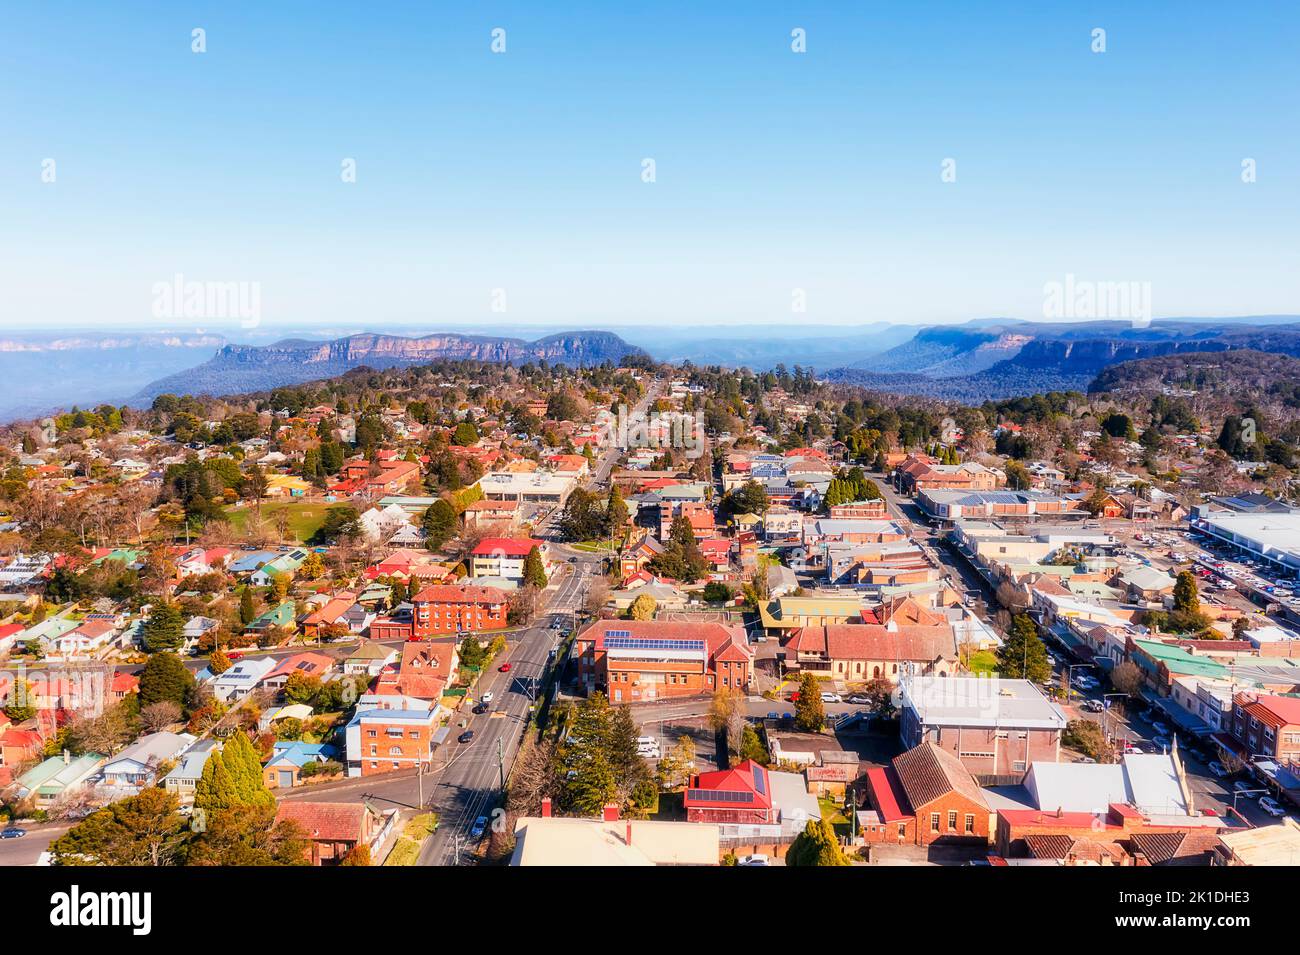 Innenstadt von Katoomba Stadt in den Blue Mountains von Australien - berühmte Three Sisters Felsformation. Stockfoto